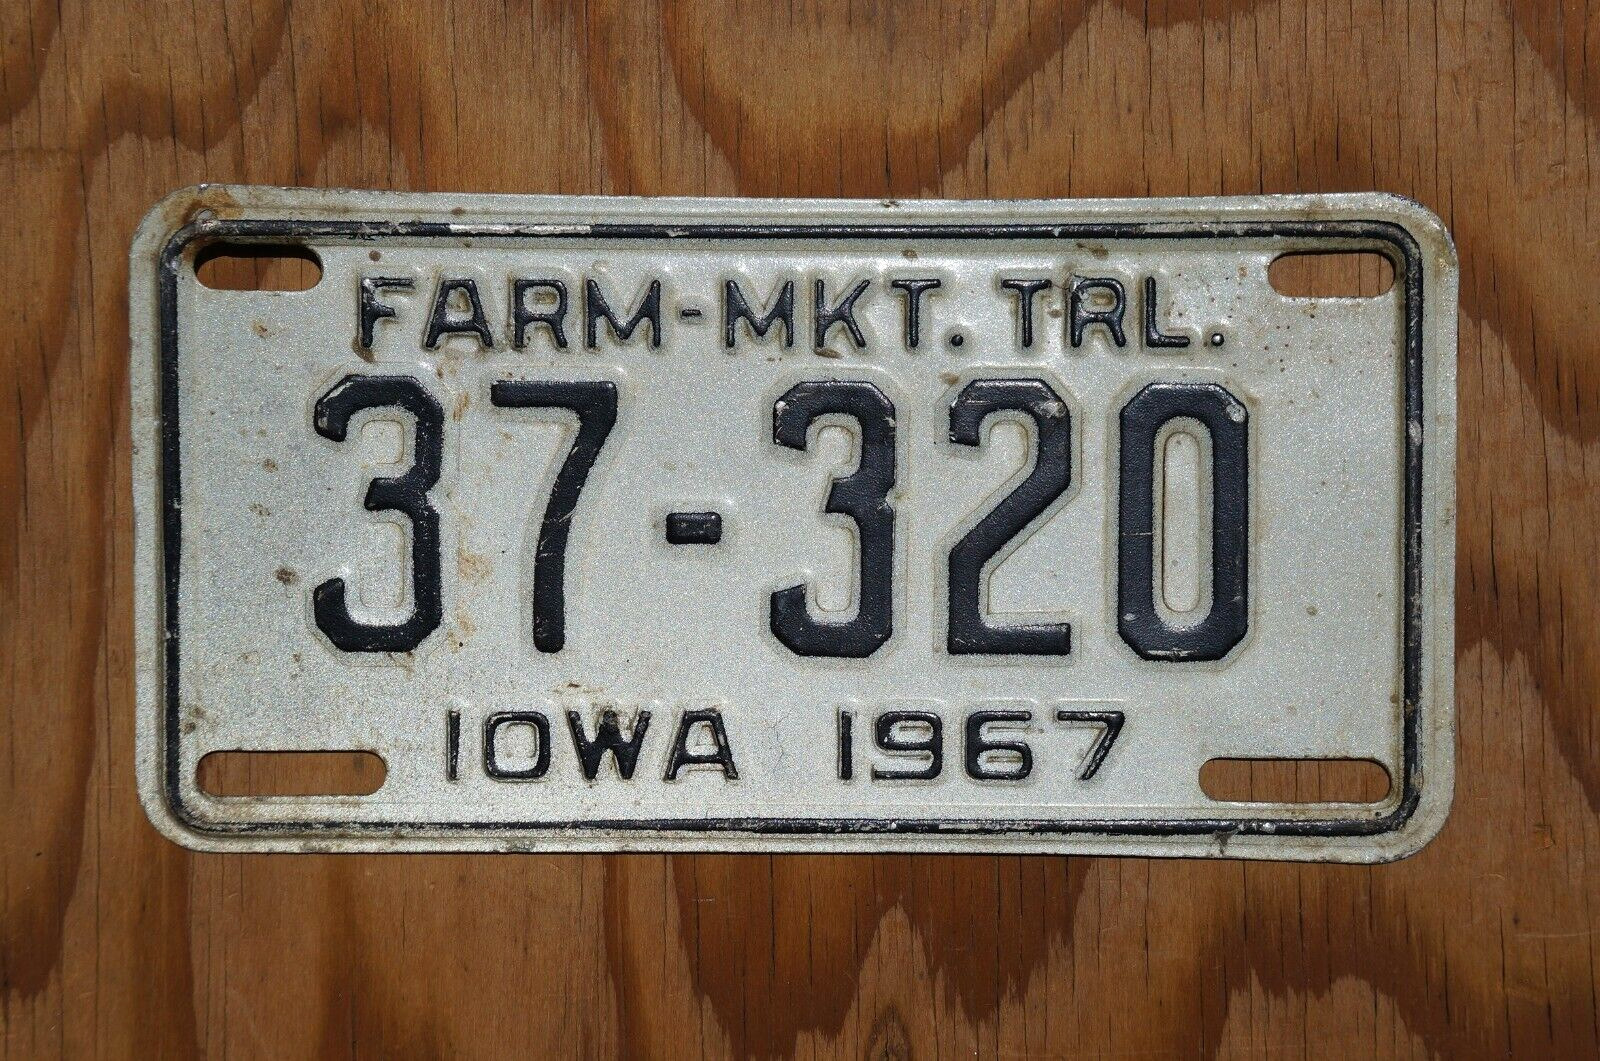 1967 Iowa FARM - MARKET TRAILER License Plate # 37 - 320